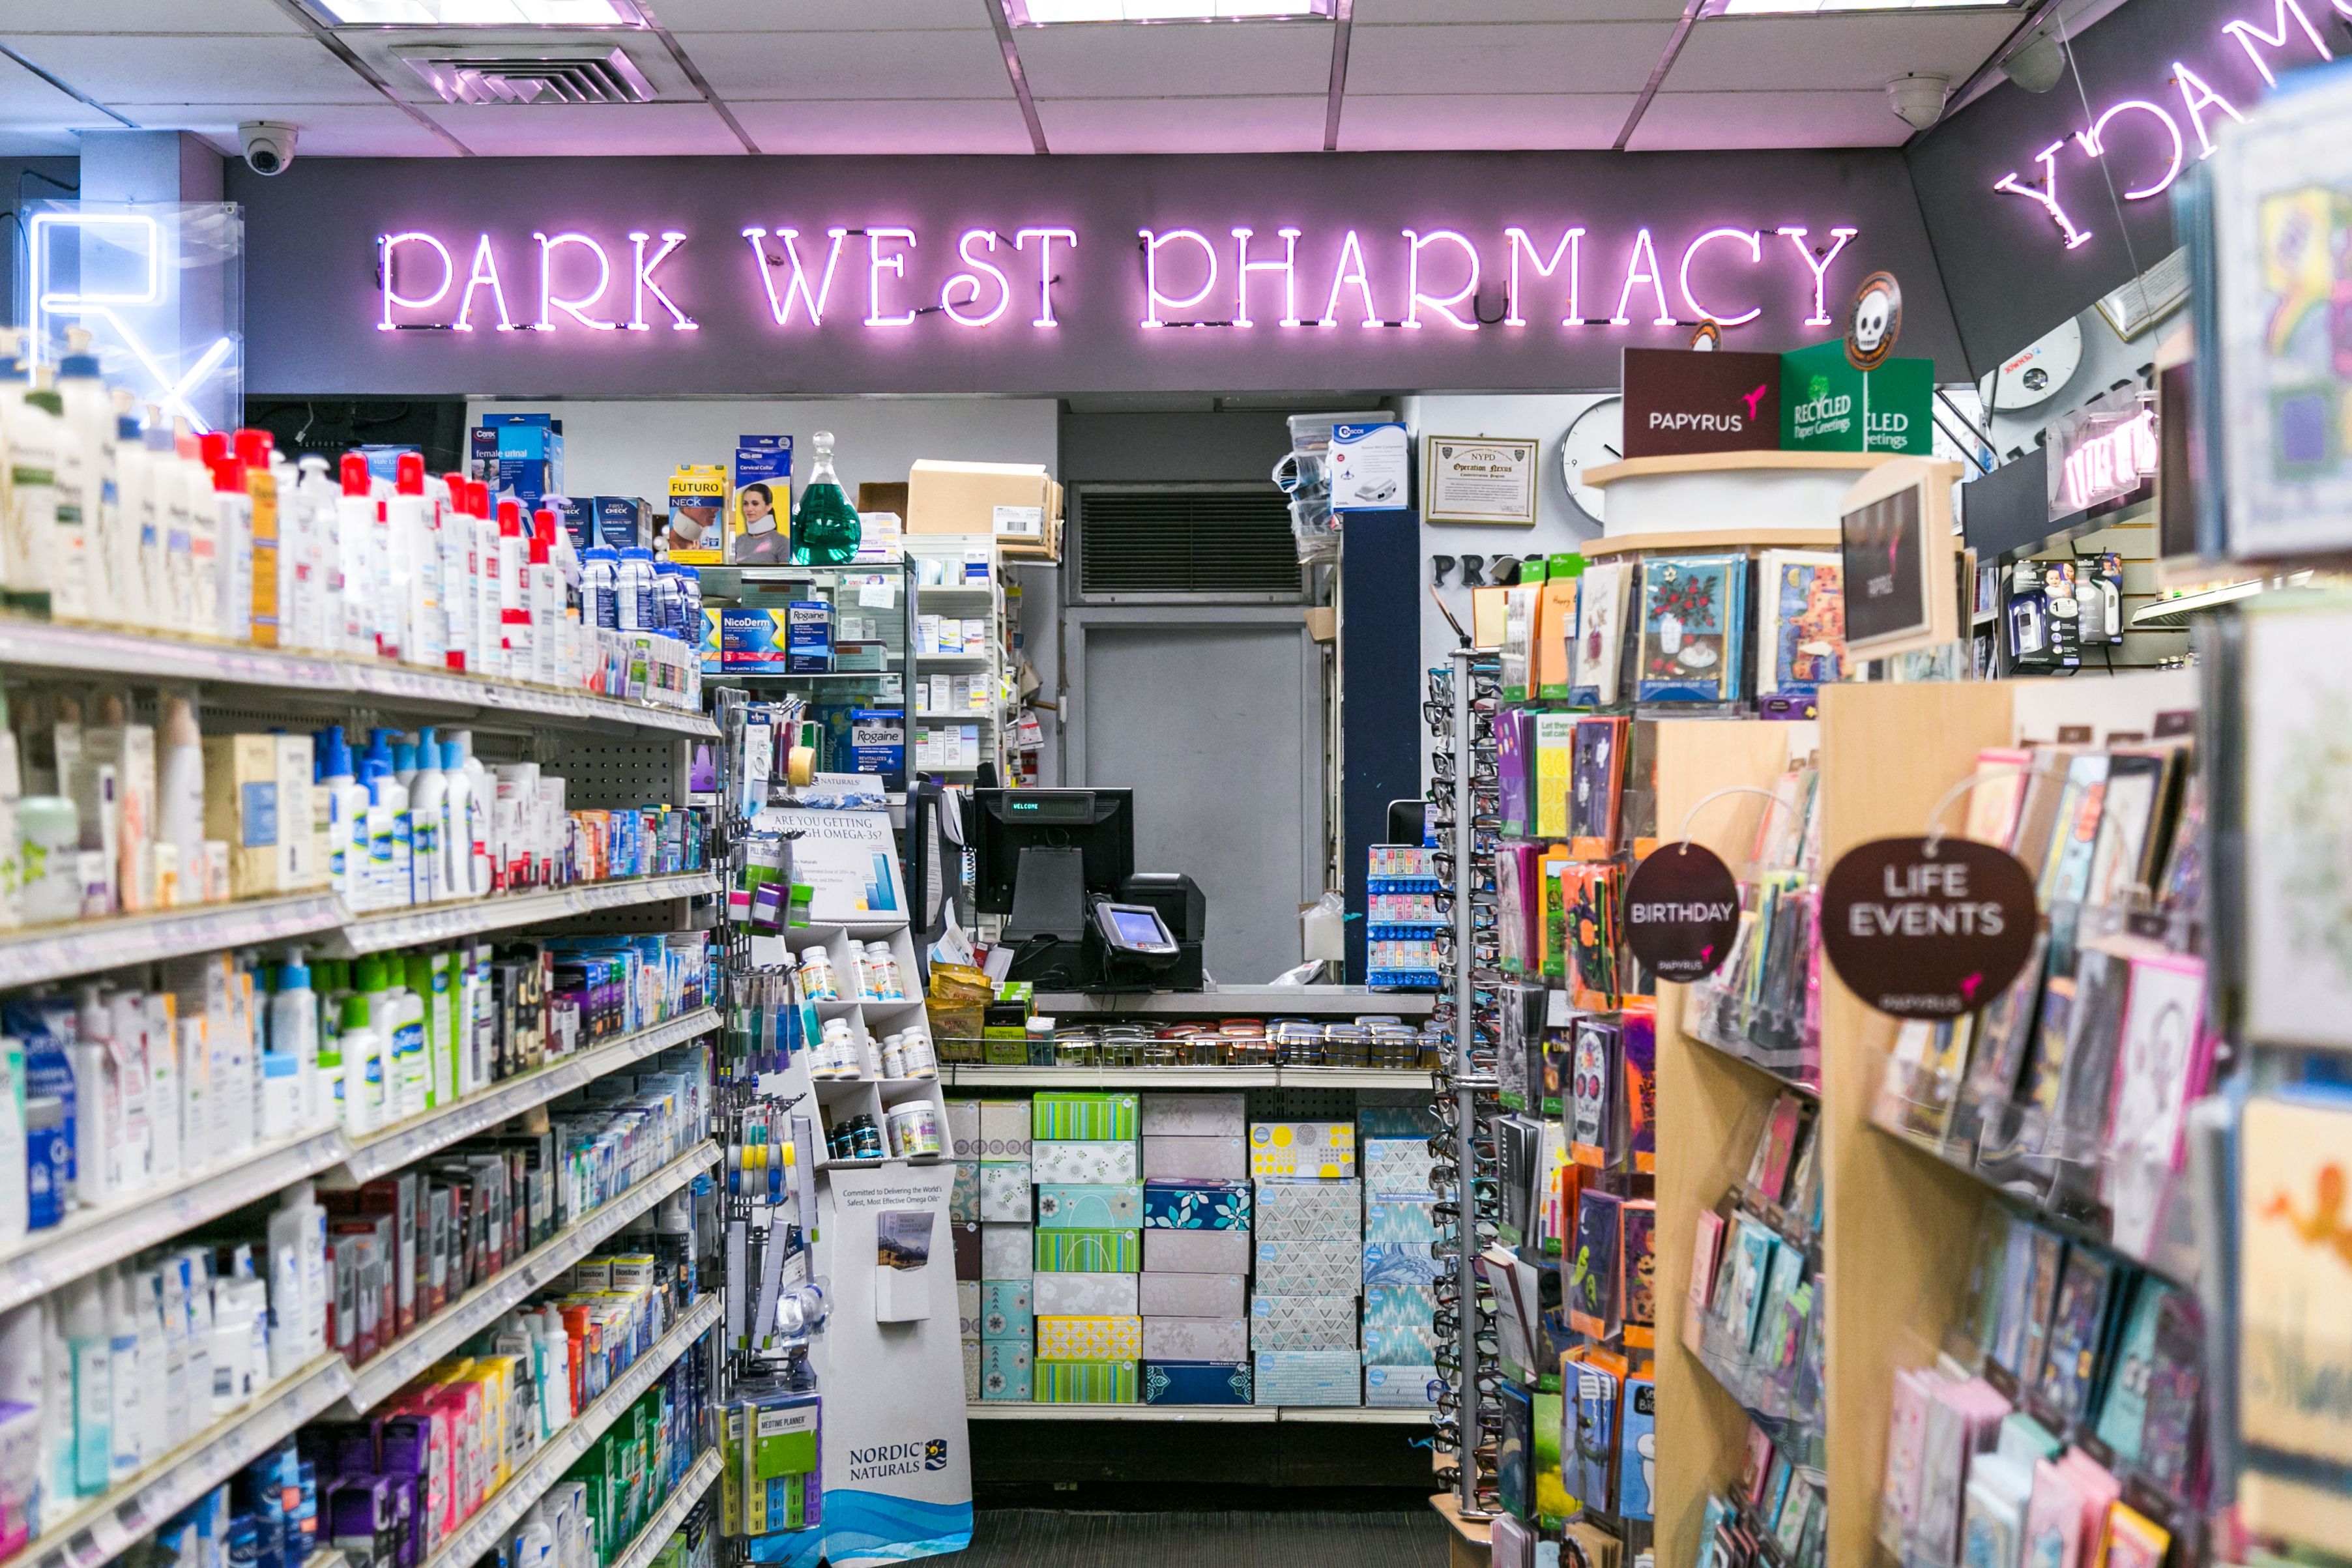 Park West Pharmacy